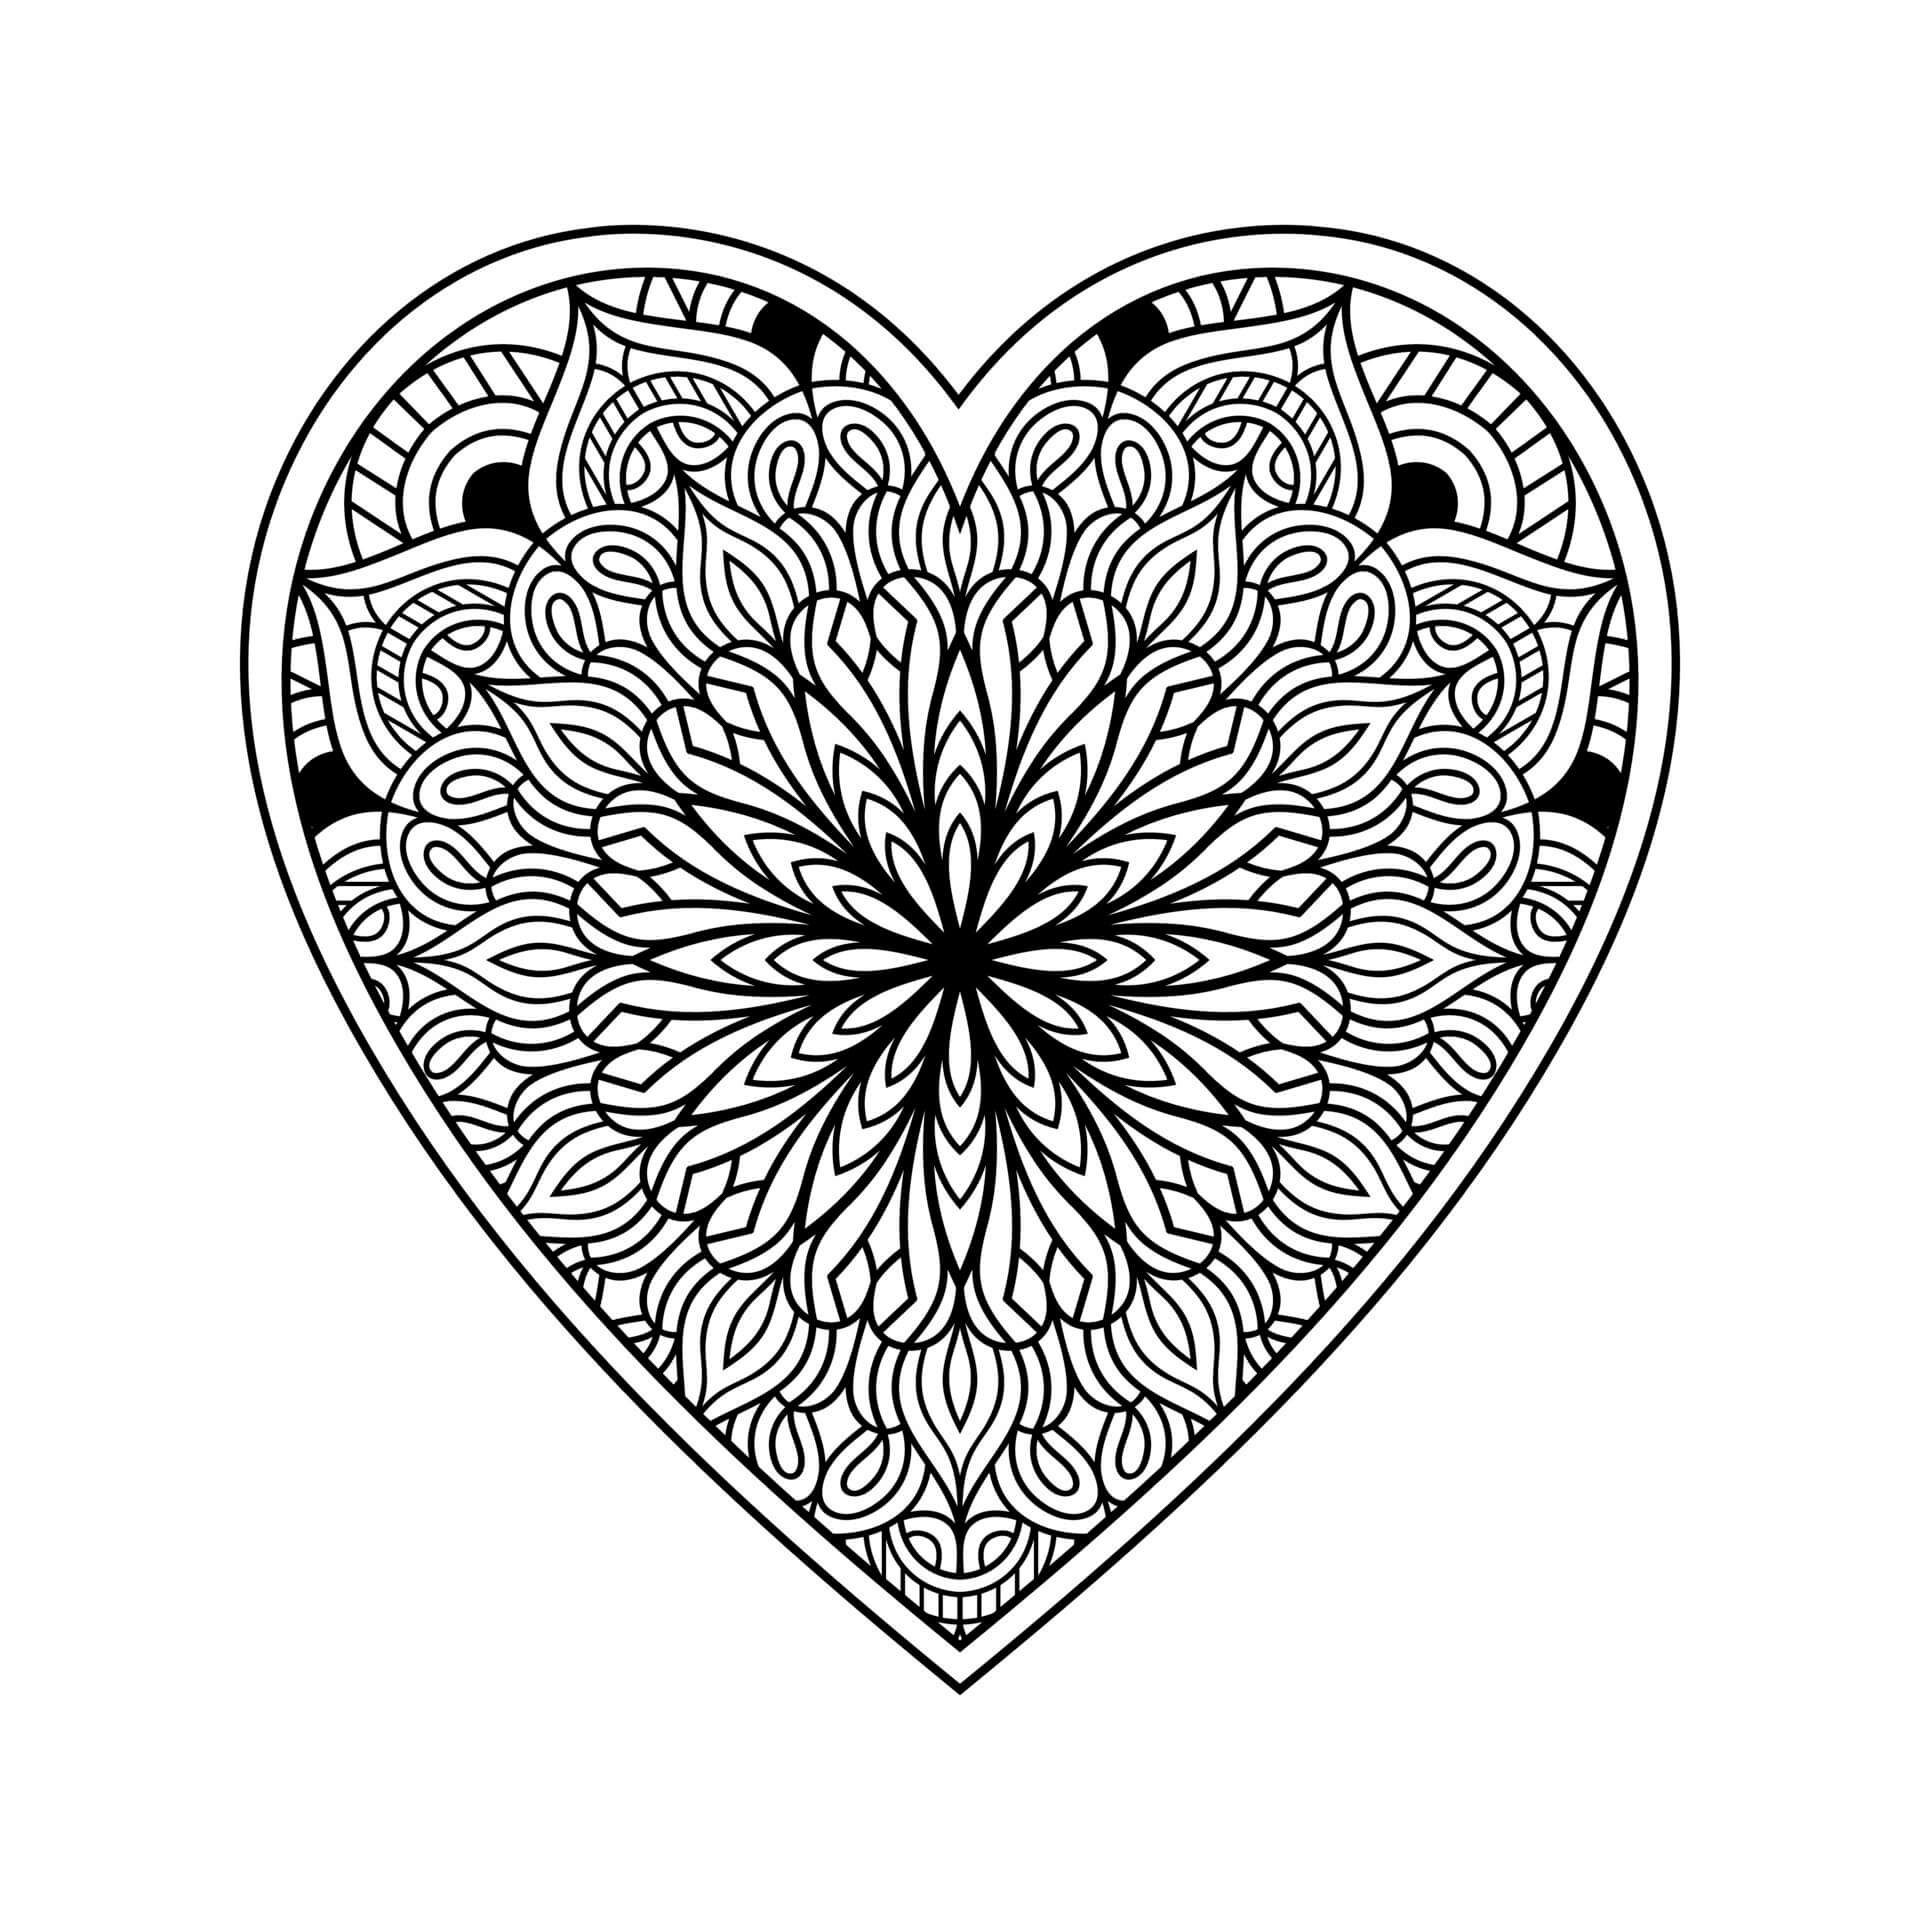 Mandala Heart Coloring Page - Sheet 17 Mandalas